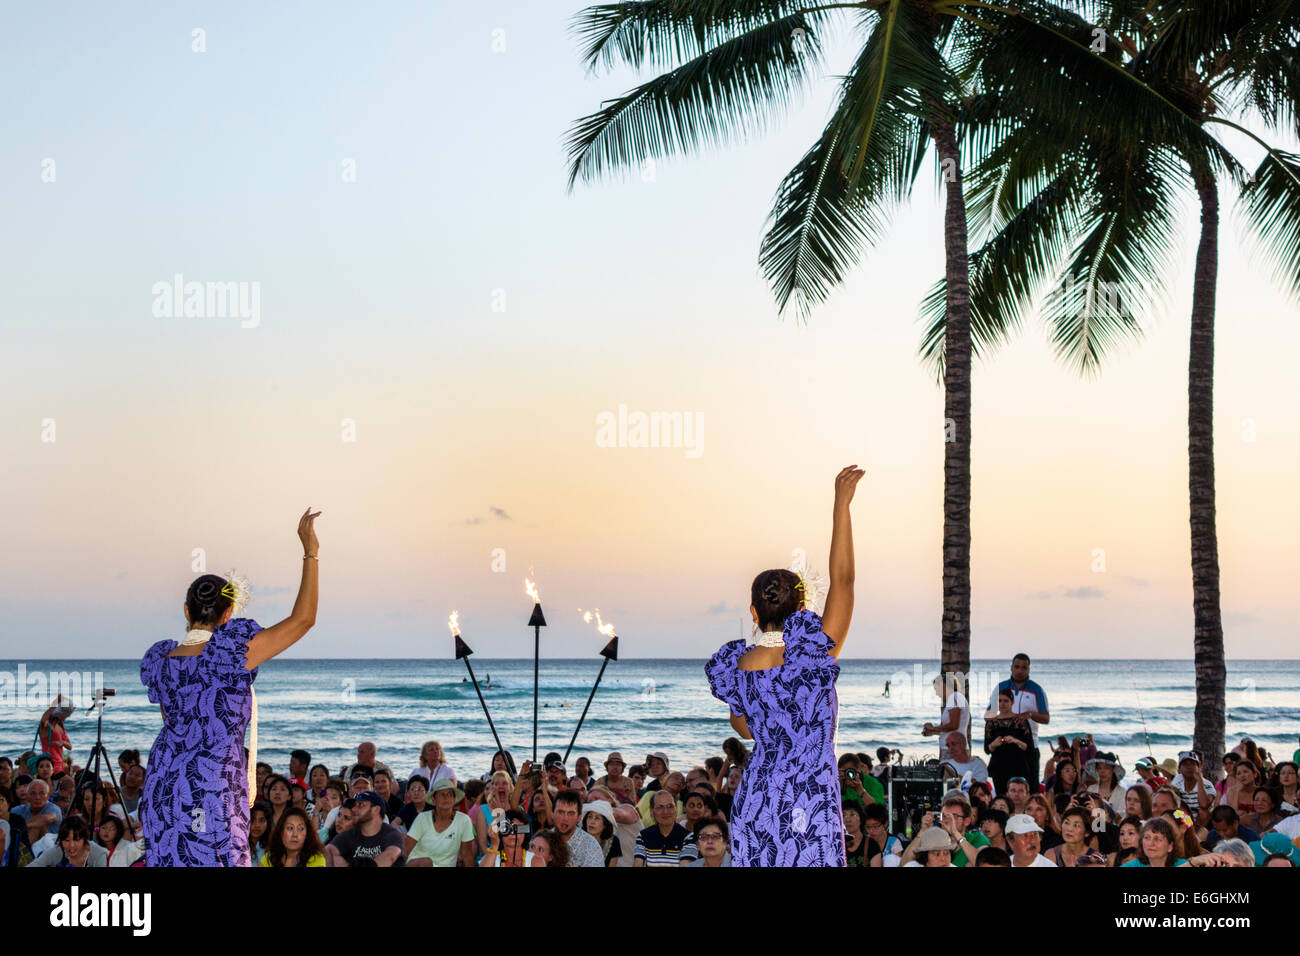 Hawaii, Hawaiian, Honolulu, Waikiki Beach, Kuhio Beach Park, Hyatt Regency Hula Show, kostenloses Publikum, Pazifischer Ozean, weibliche Frauen, Tänzerin, Fackel, beleuchtet, USA, USA Stockfoto